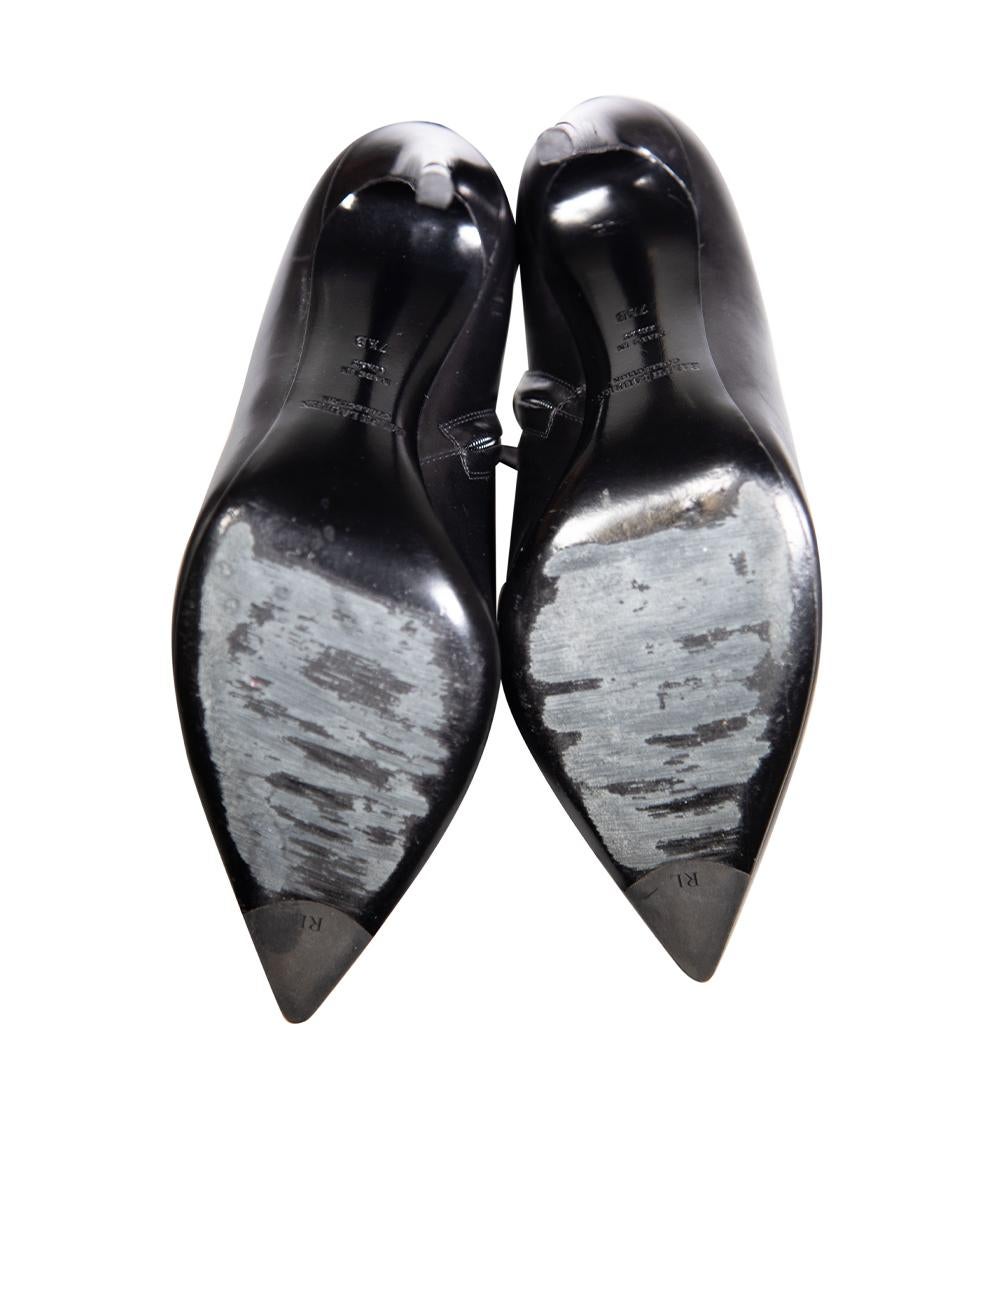 Women's Ralph Lauren Ralph Lauren Collection Black Leather Ankle Boots Size US 7.5